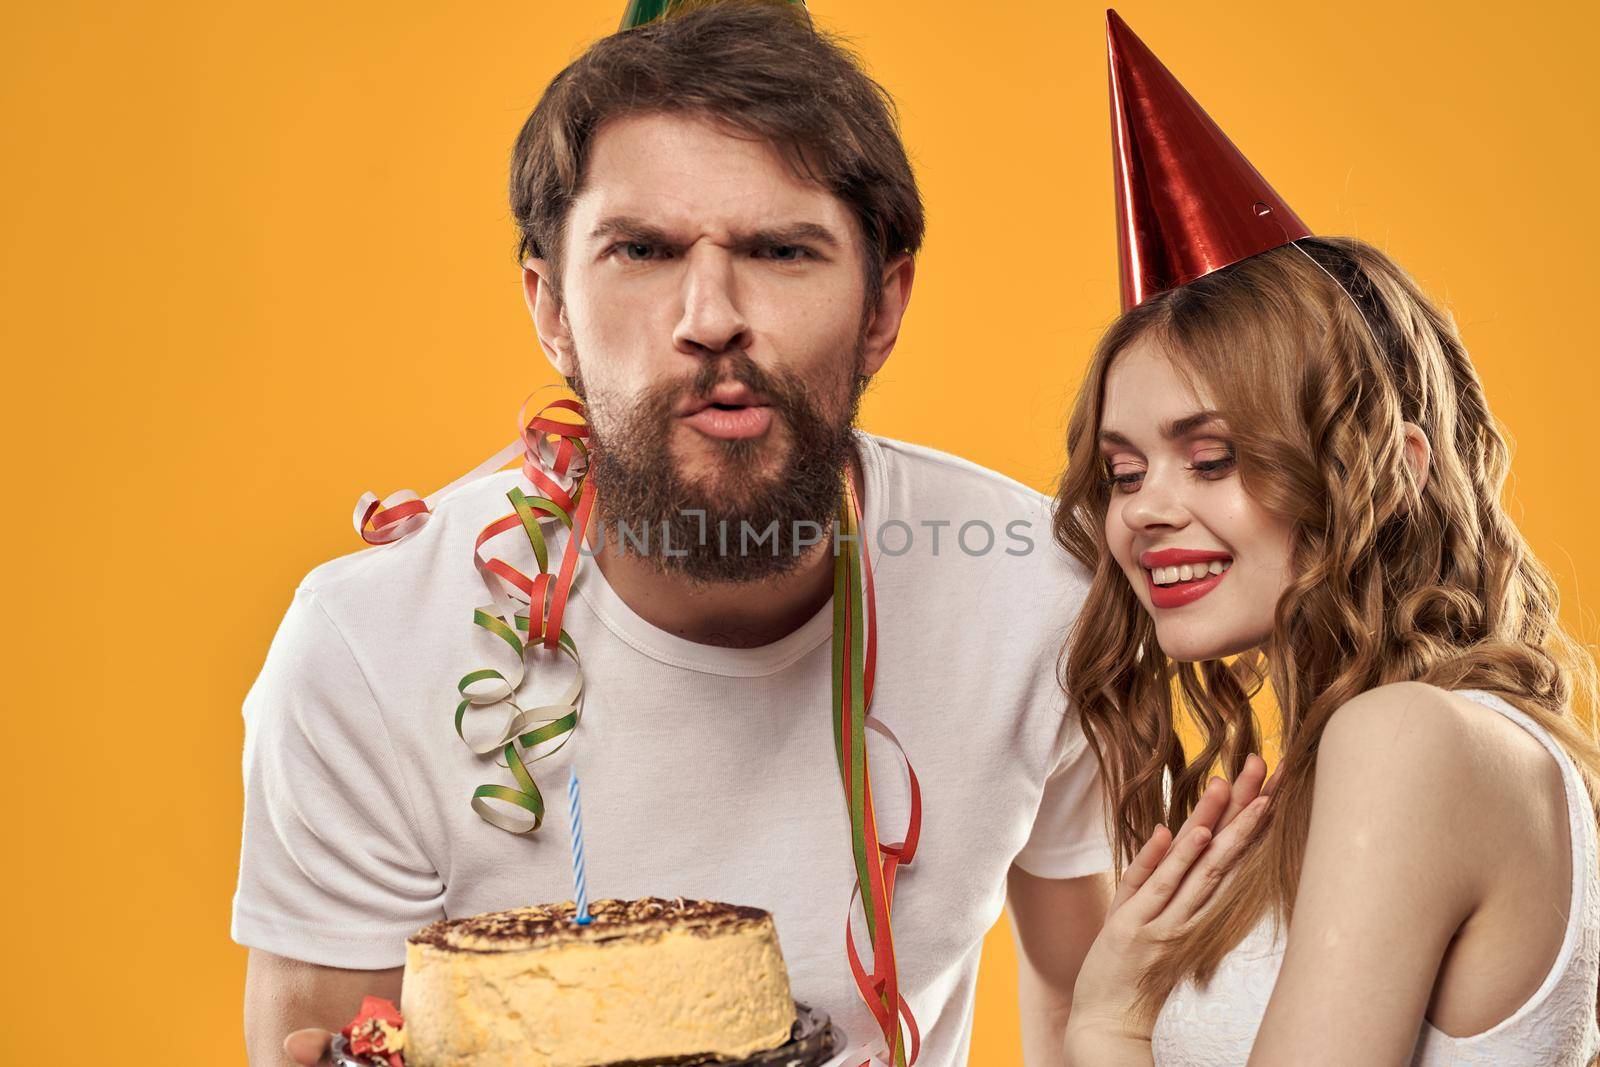 Man and woman celebration fun birthday cake by SHOTPRIME